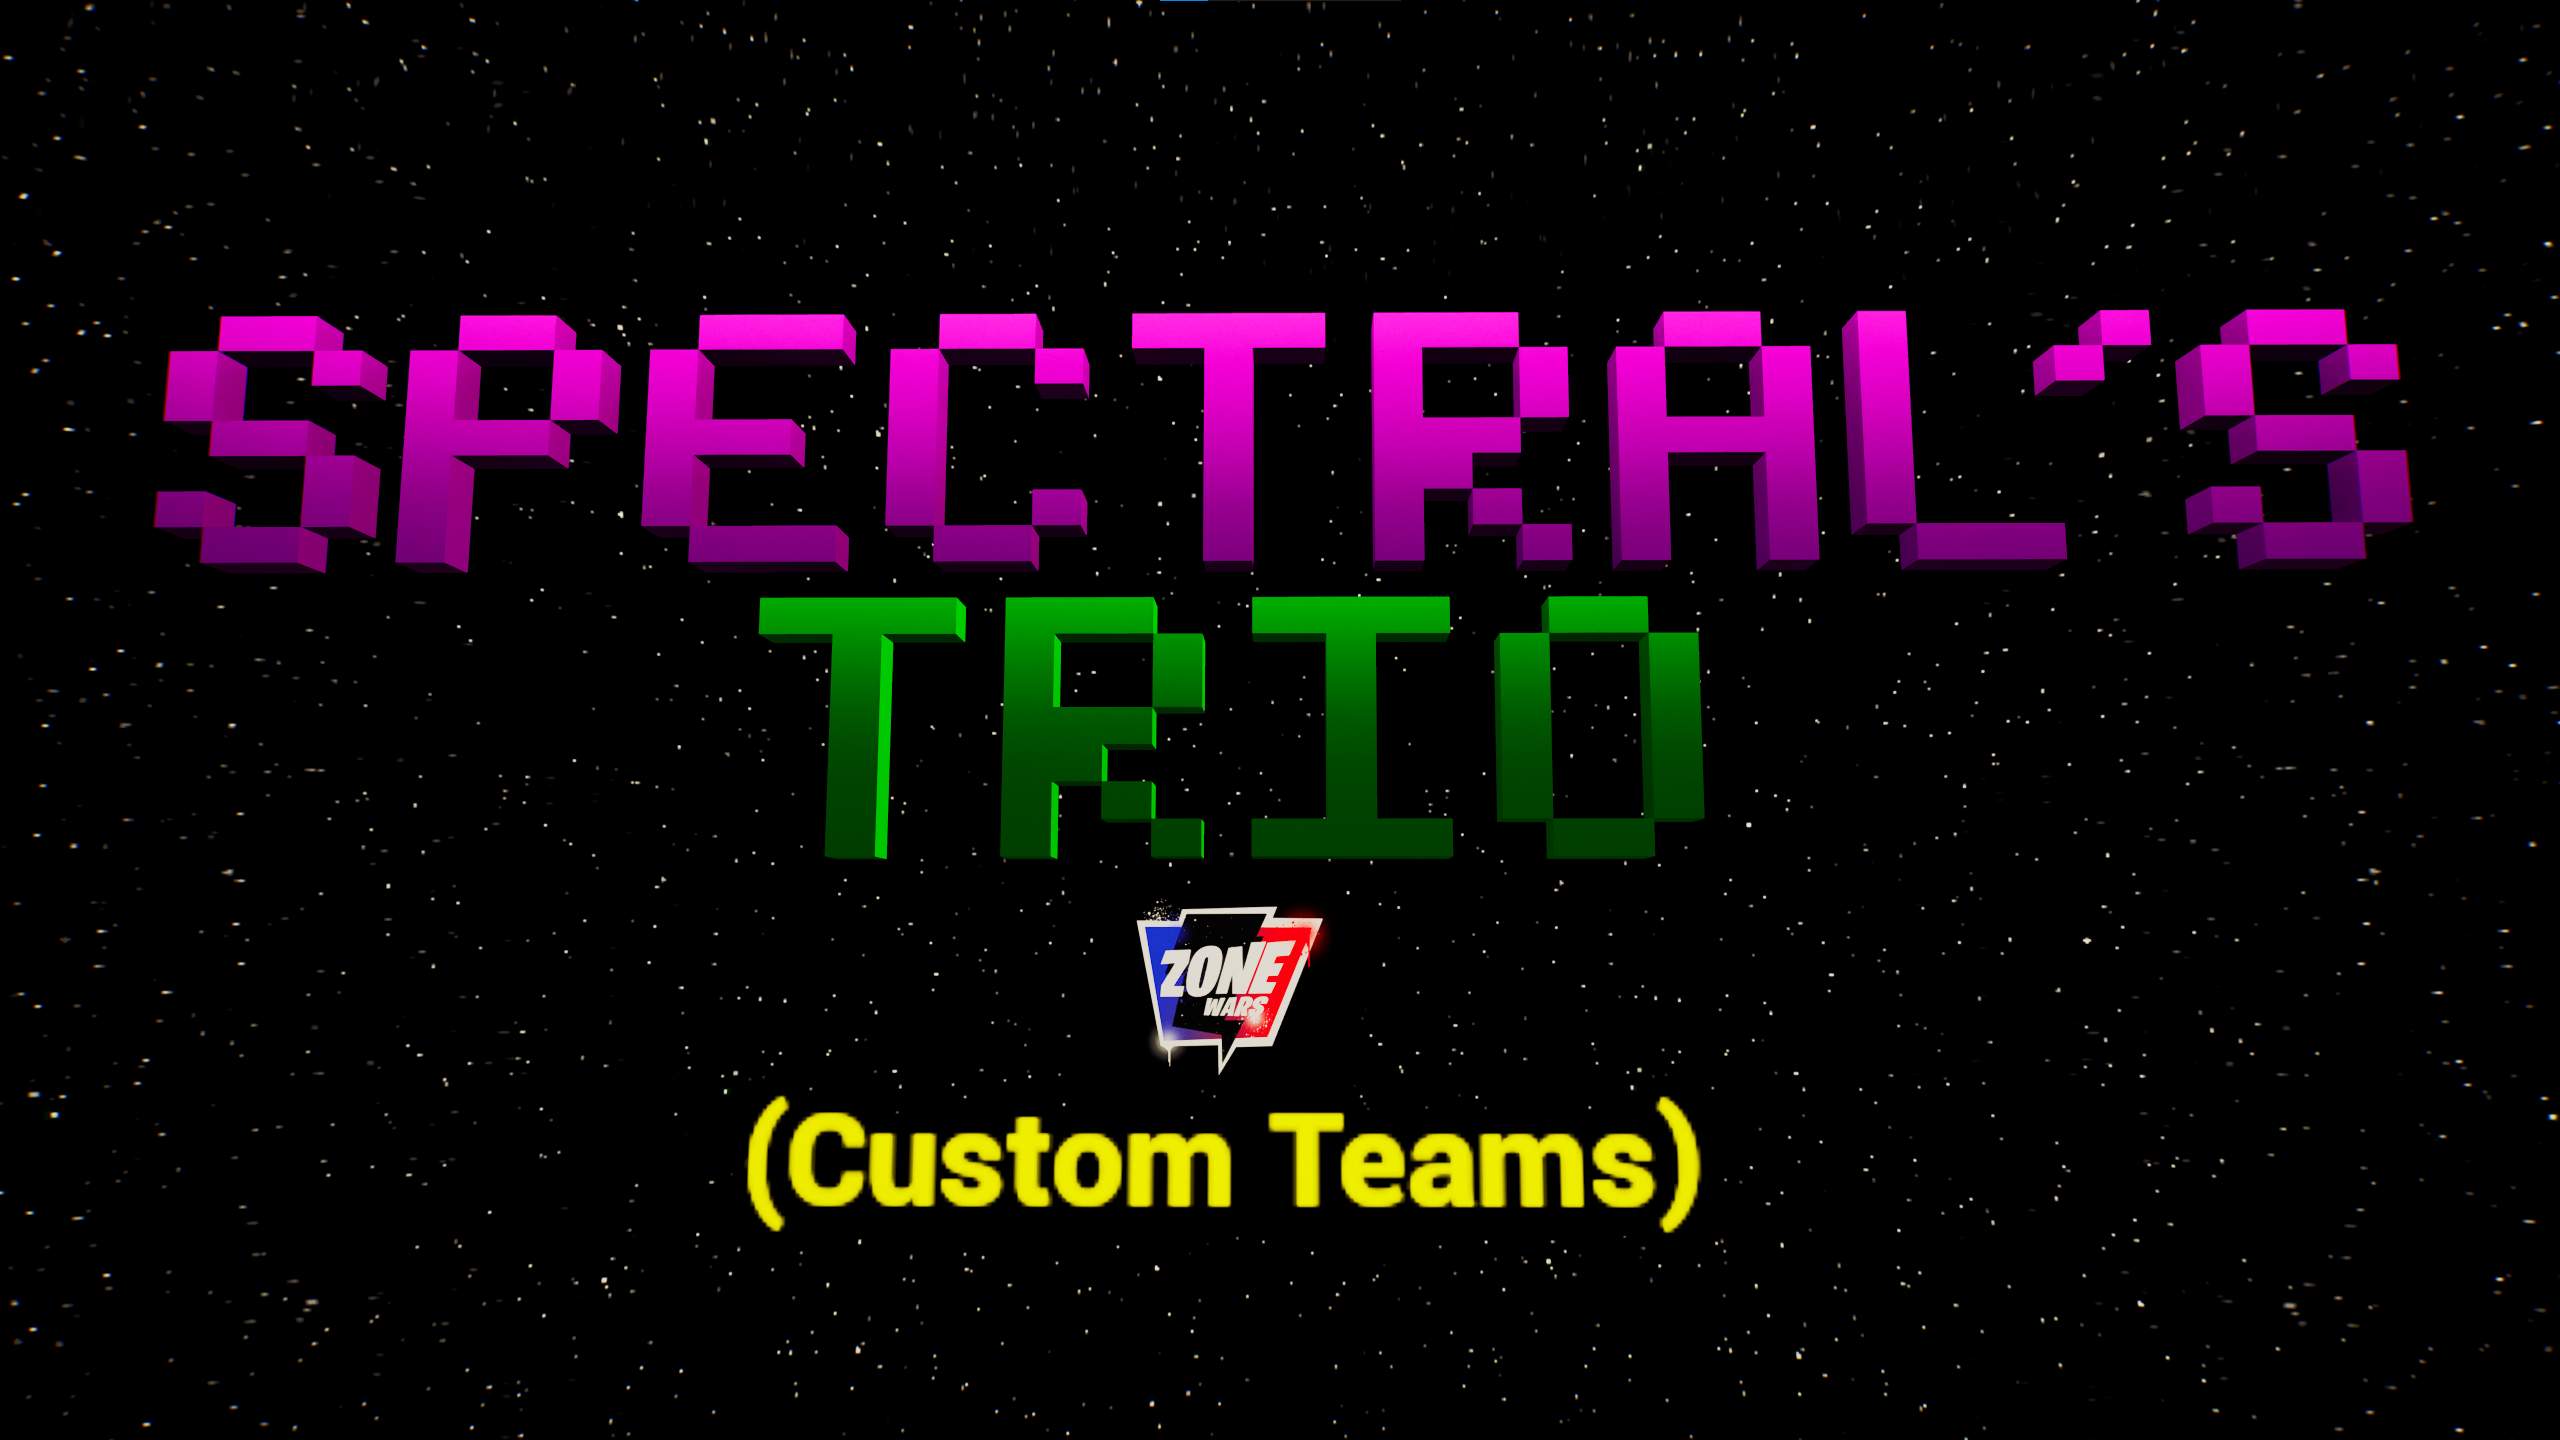 SPECTRAL'S TRIO ZONE WARS (CUSTOM TEAMS)